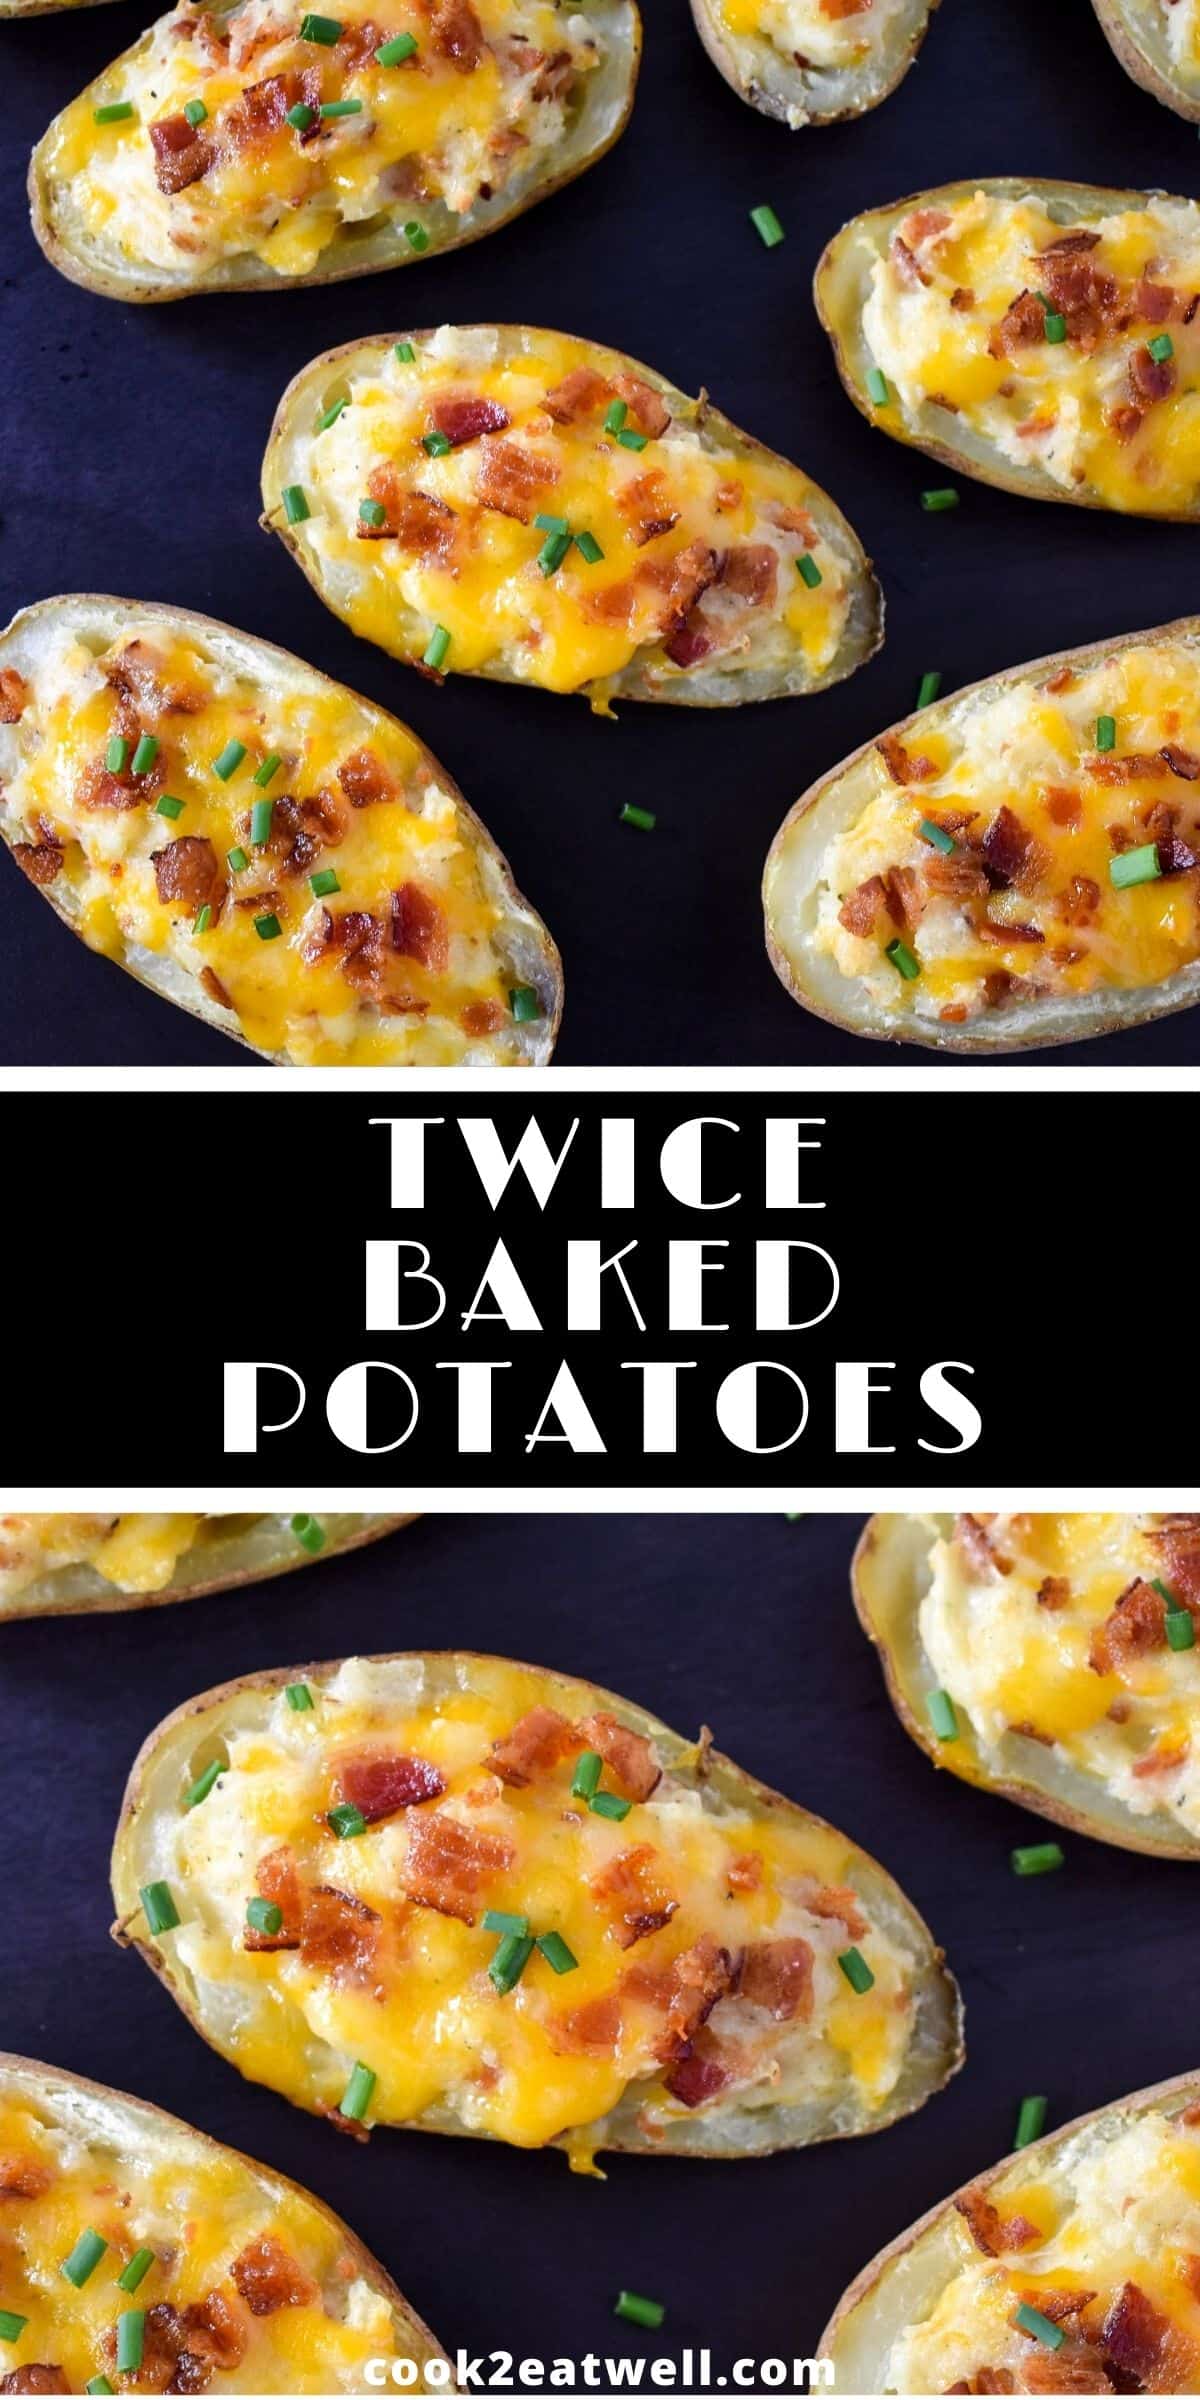 Twice Baked Potatoes - Cook2eatwell